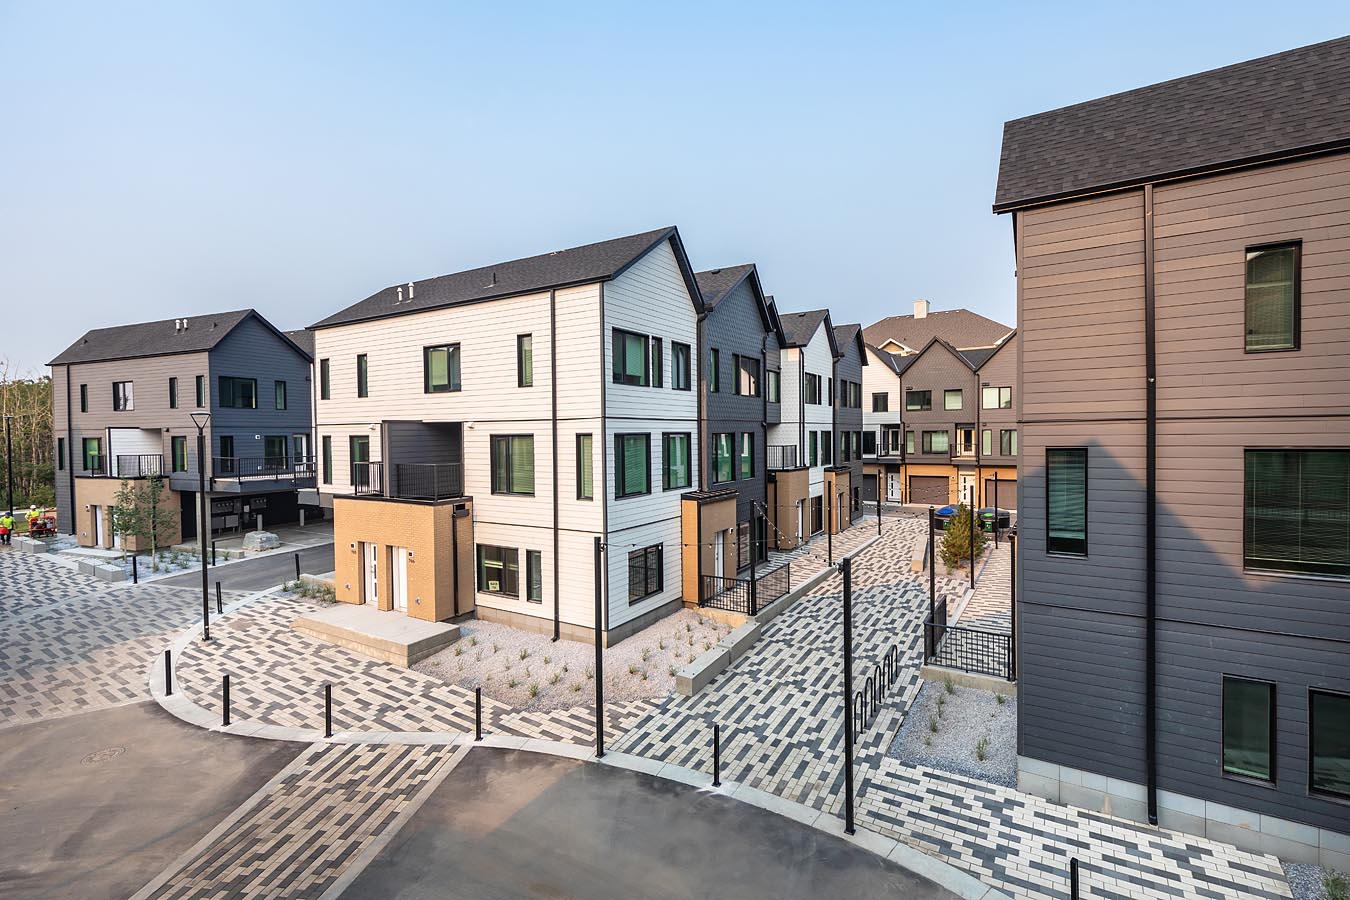 Calgary gets new affordable housing development - Calgary